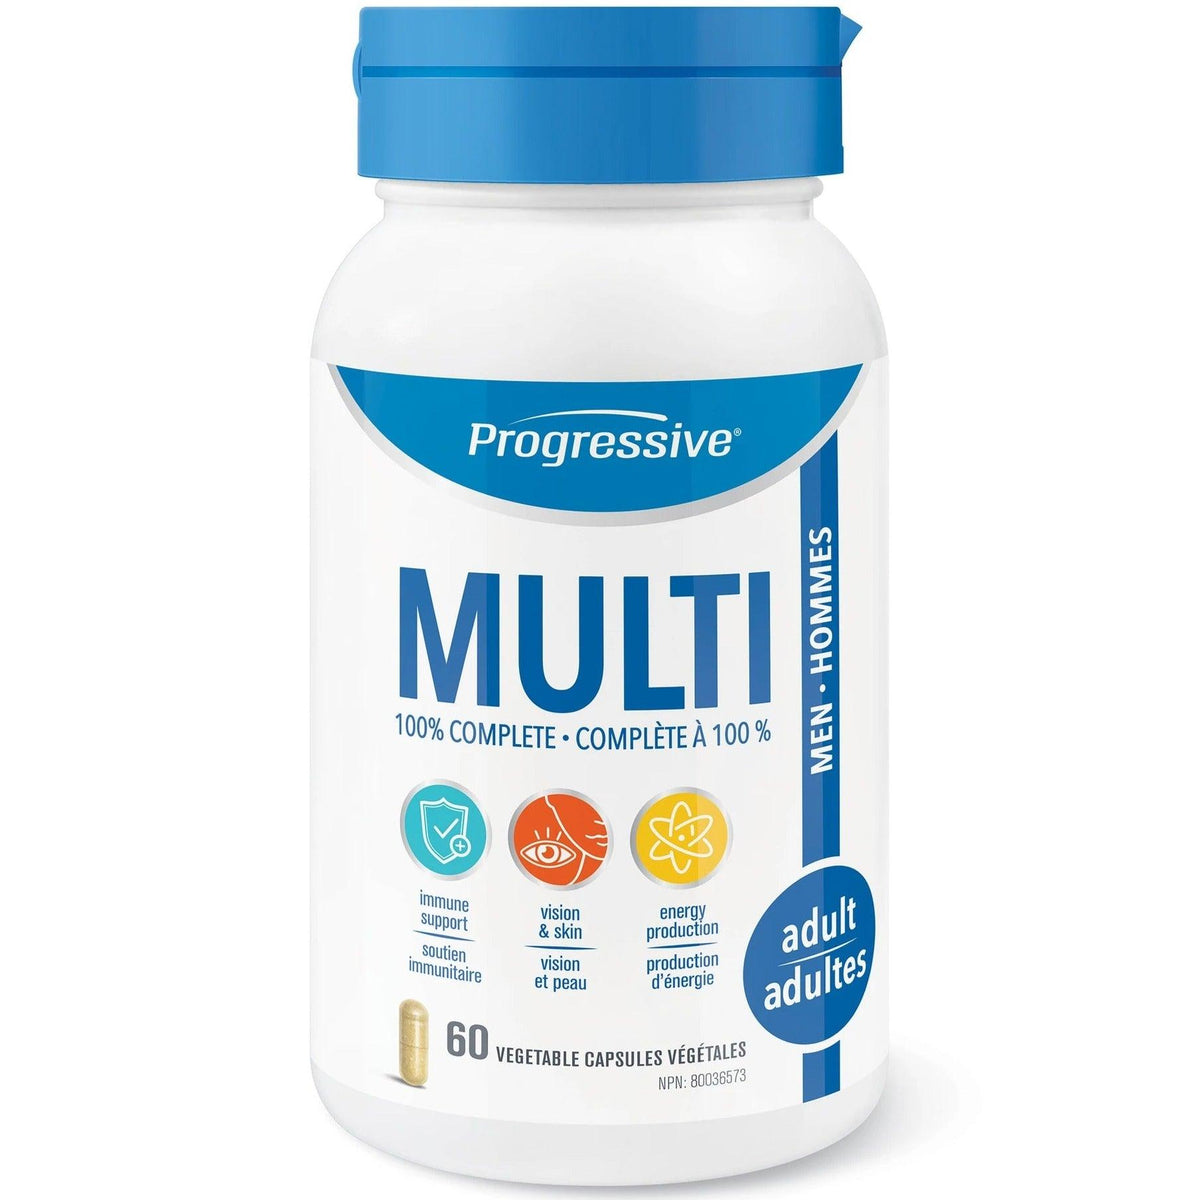 Progressive Multi Adult Men 60 Veggie Caps Vitamins - Multivitamins at Village Vitamin Store